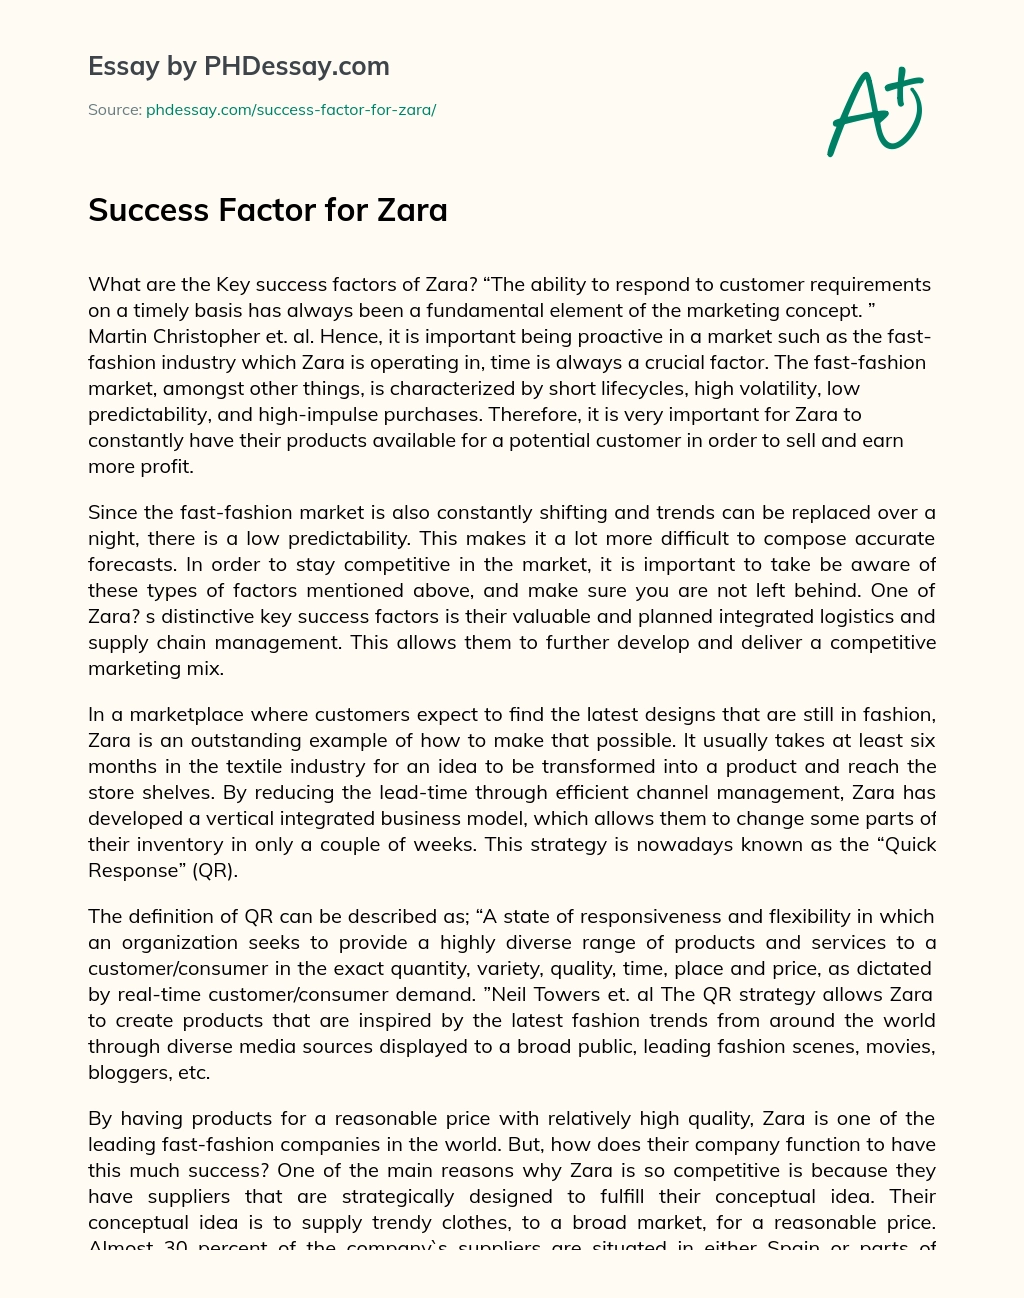 Success Factor for Zara essay